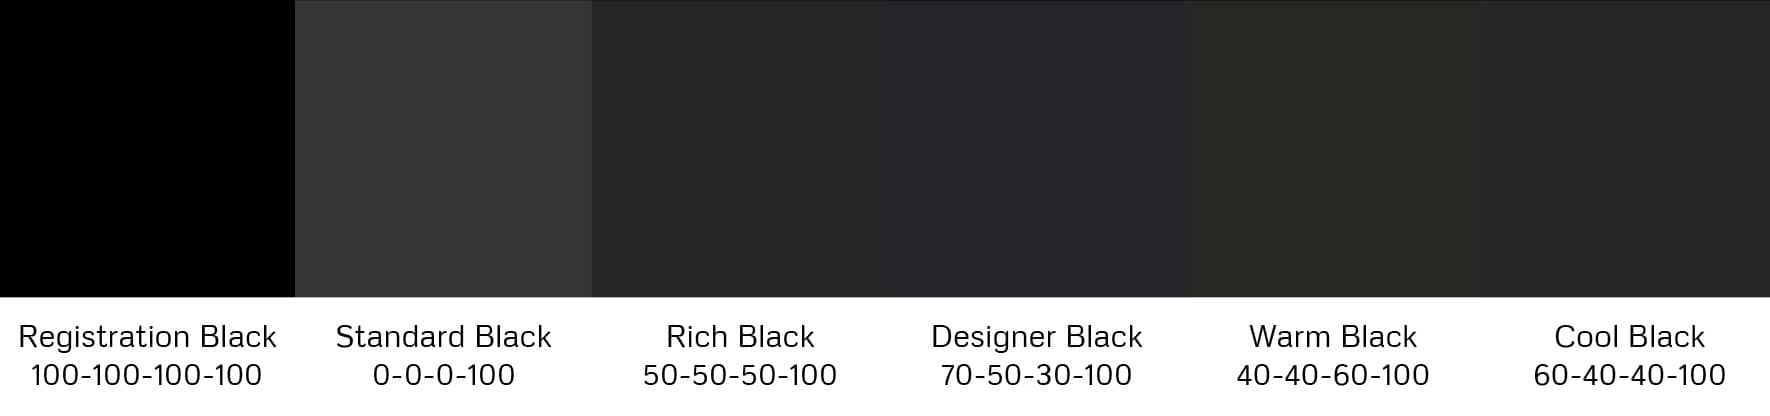 Registration Black vs Standard Black vs Rich Black for Commercial Printing